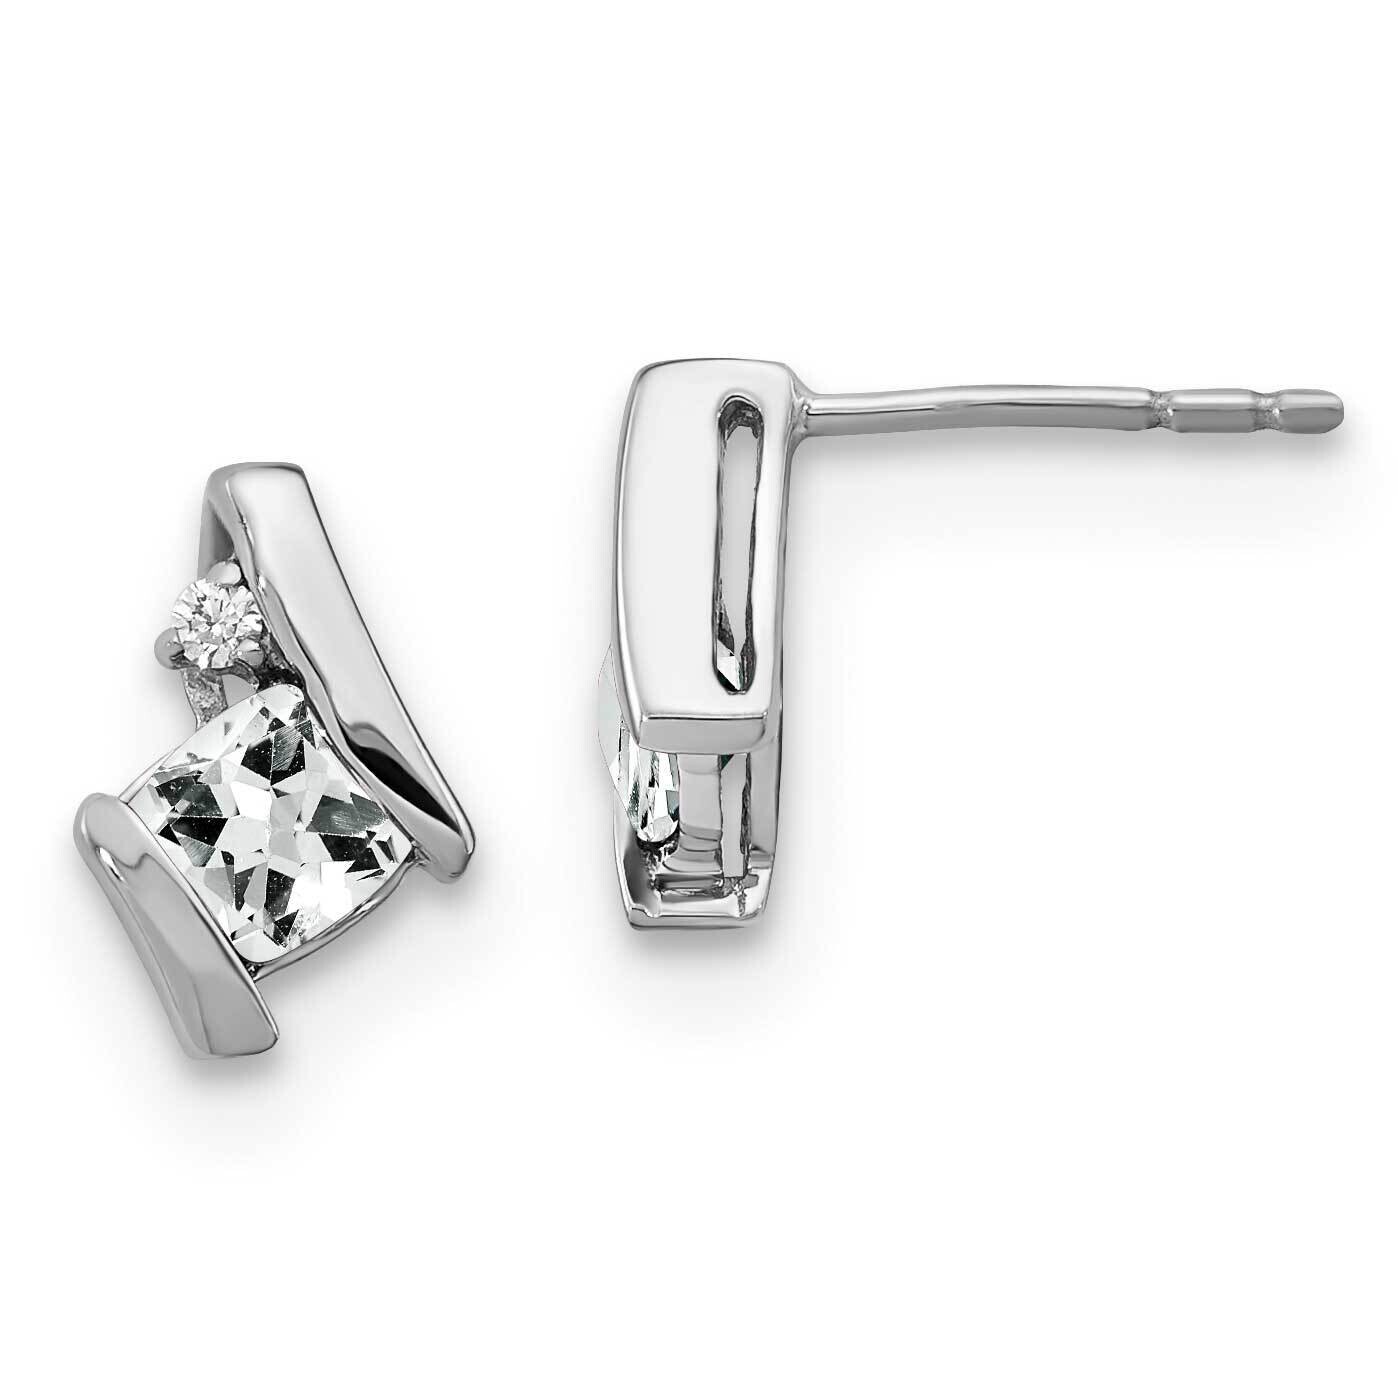 Cushion White Topaz Diamond Earrings 10k White Gold EM7398-WT-003-1WA